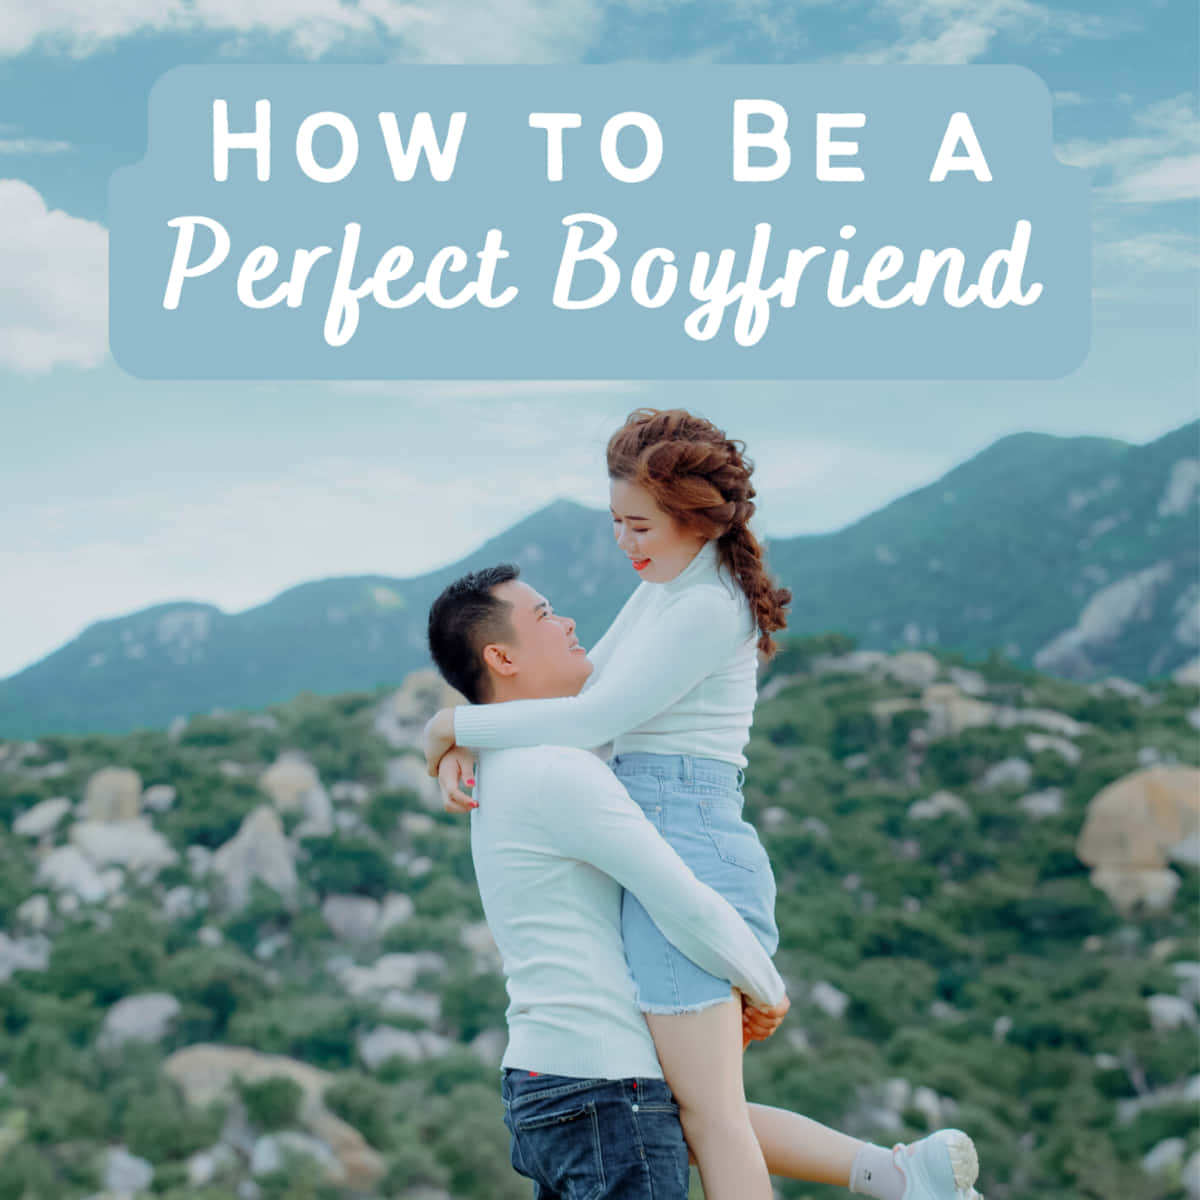 Find The Perfect Boyfriend